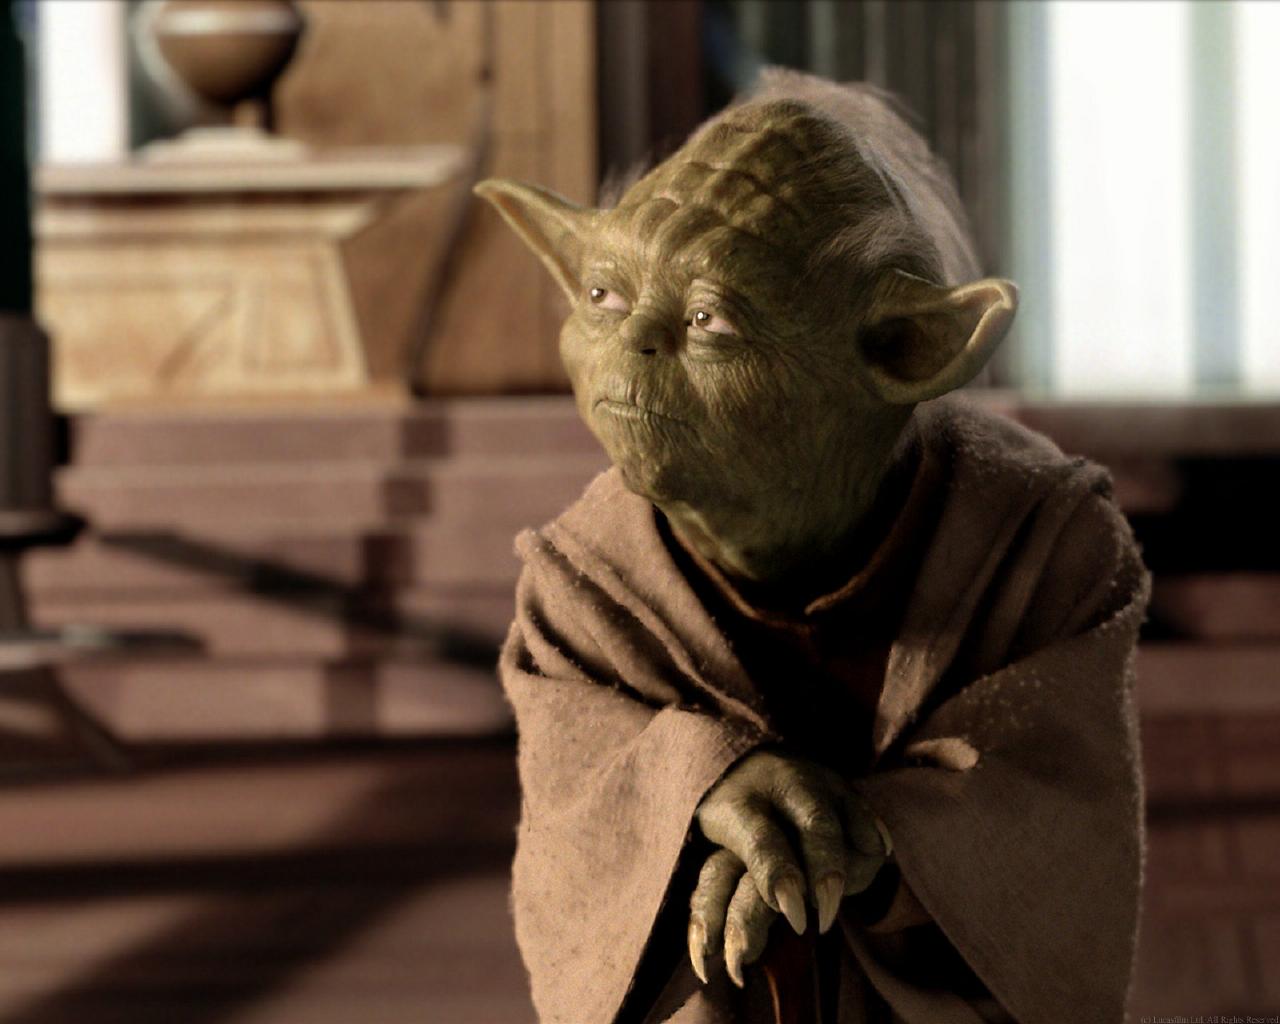 Yoda listening to Obi-Wan